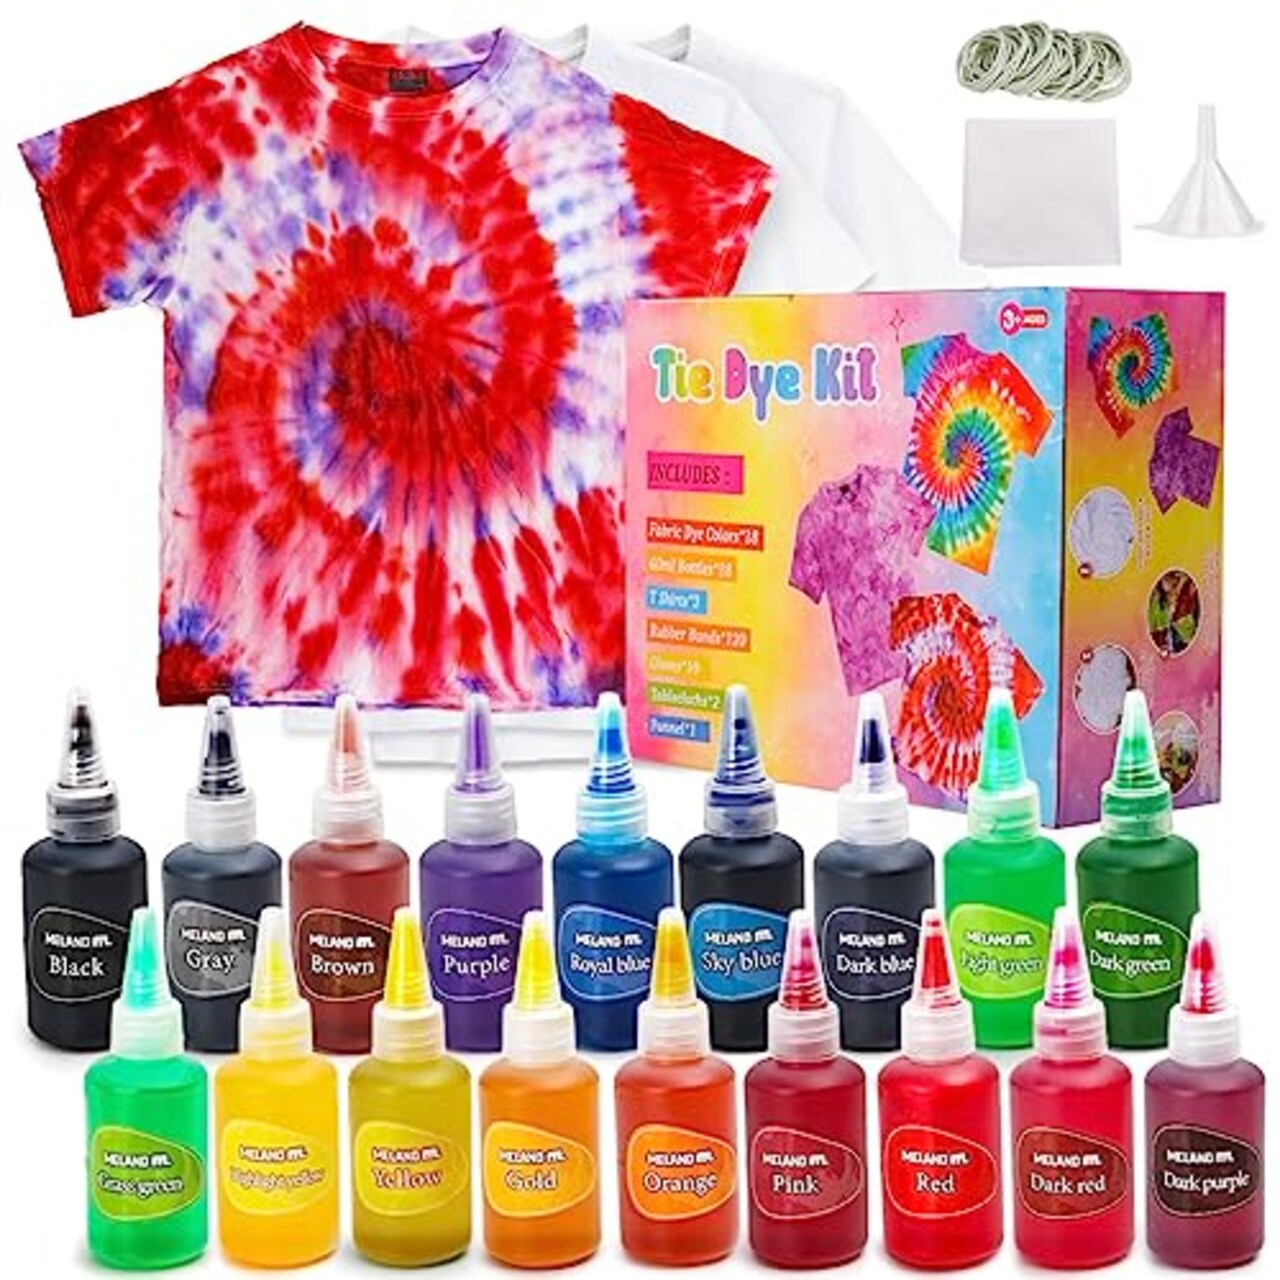 Meland Tie Dye Kit with 3 White T-Shirts, 18 Colors DIY Fabric Tye Dye for